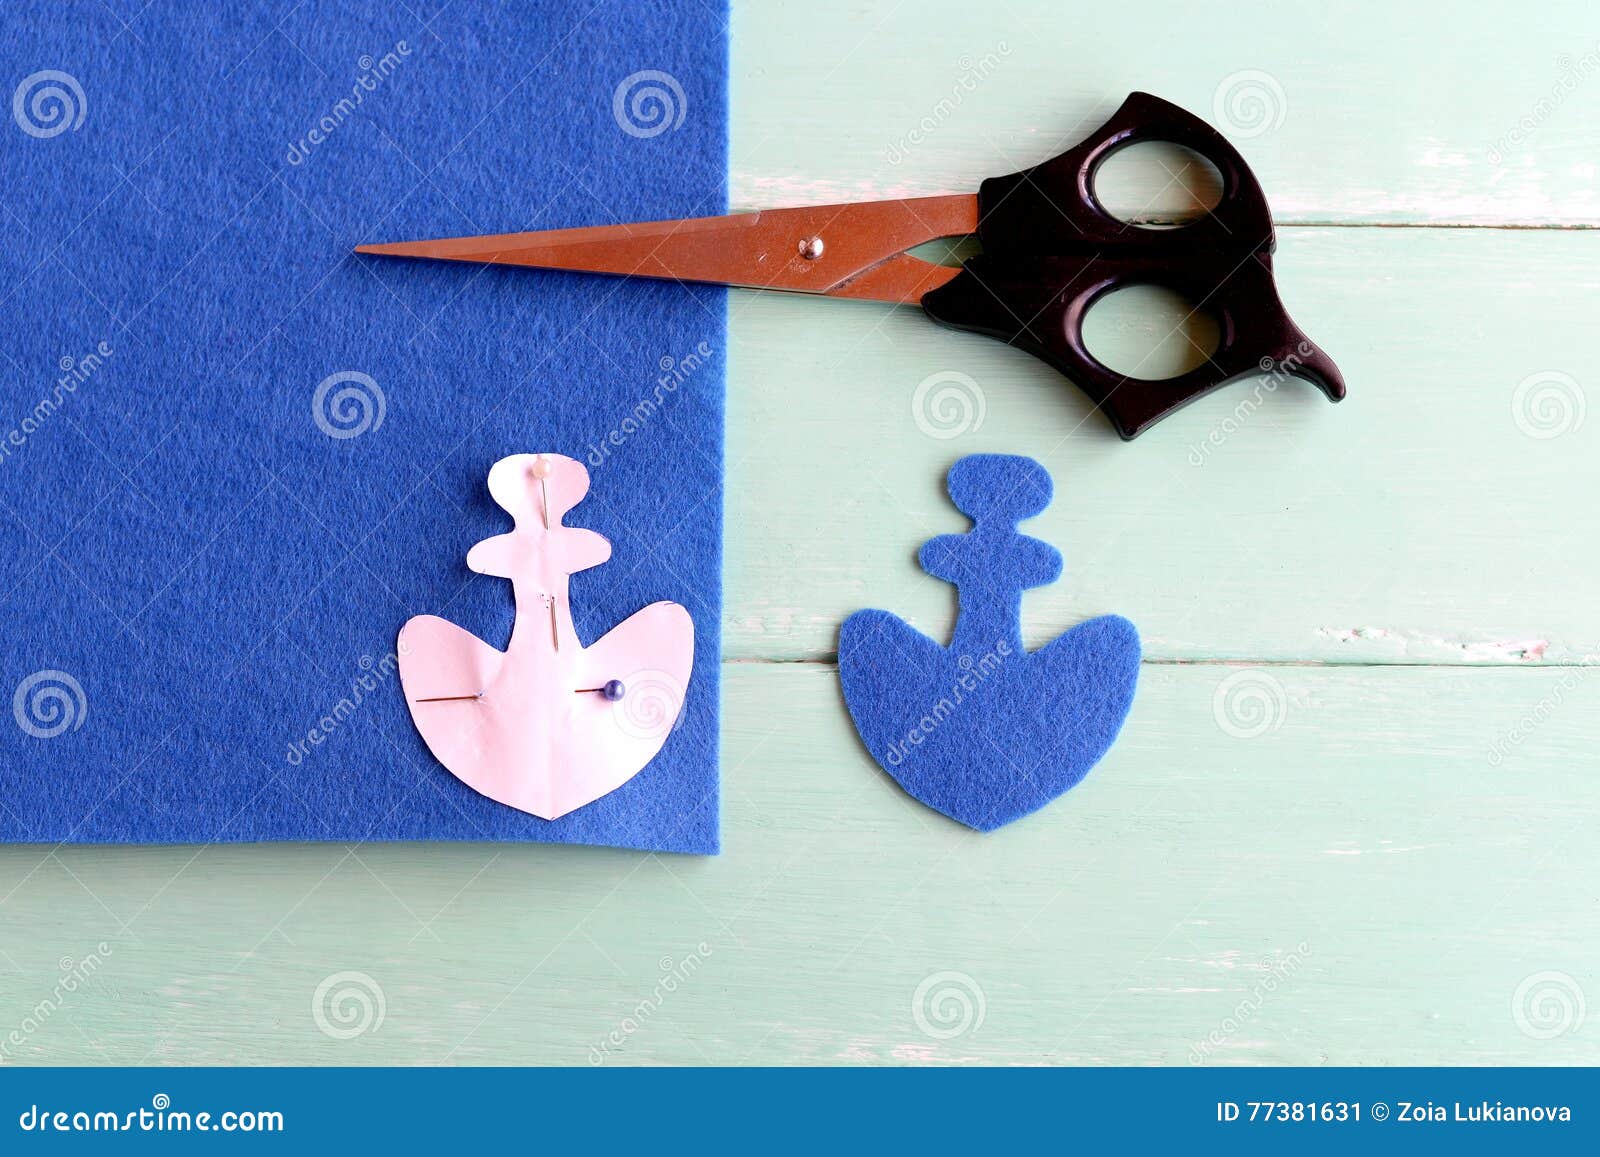 https://thumbs.dreamstime.com/z/felt-piece-cut-shape-anchor-scissors-paper-template-pins-wooden-background-sewing-lesson-kids-diy-idea-77381631.jpg